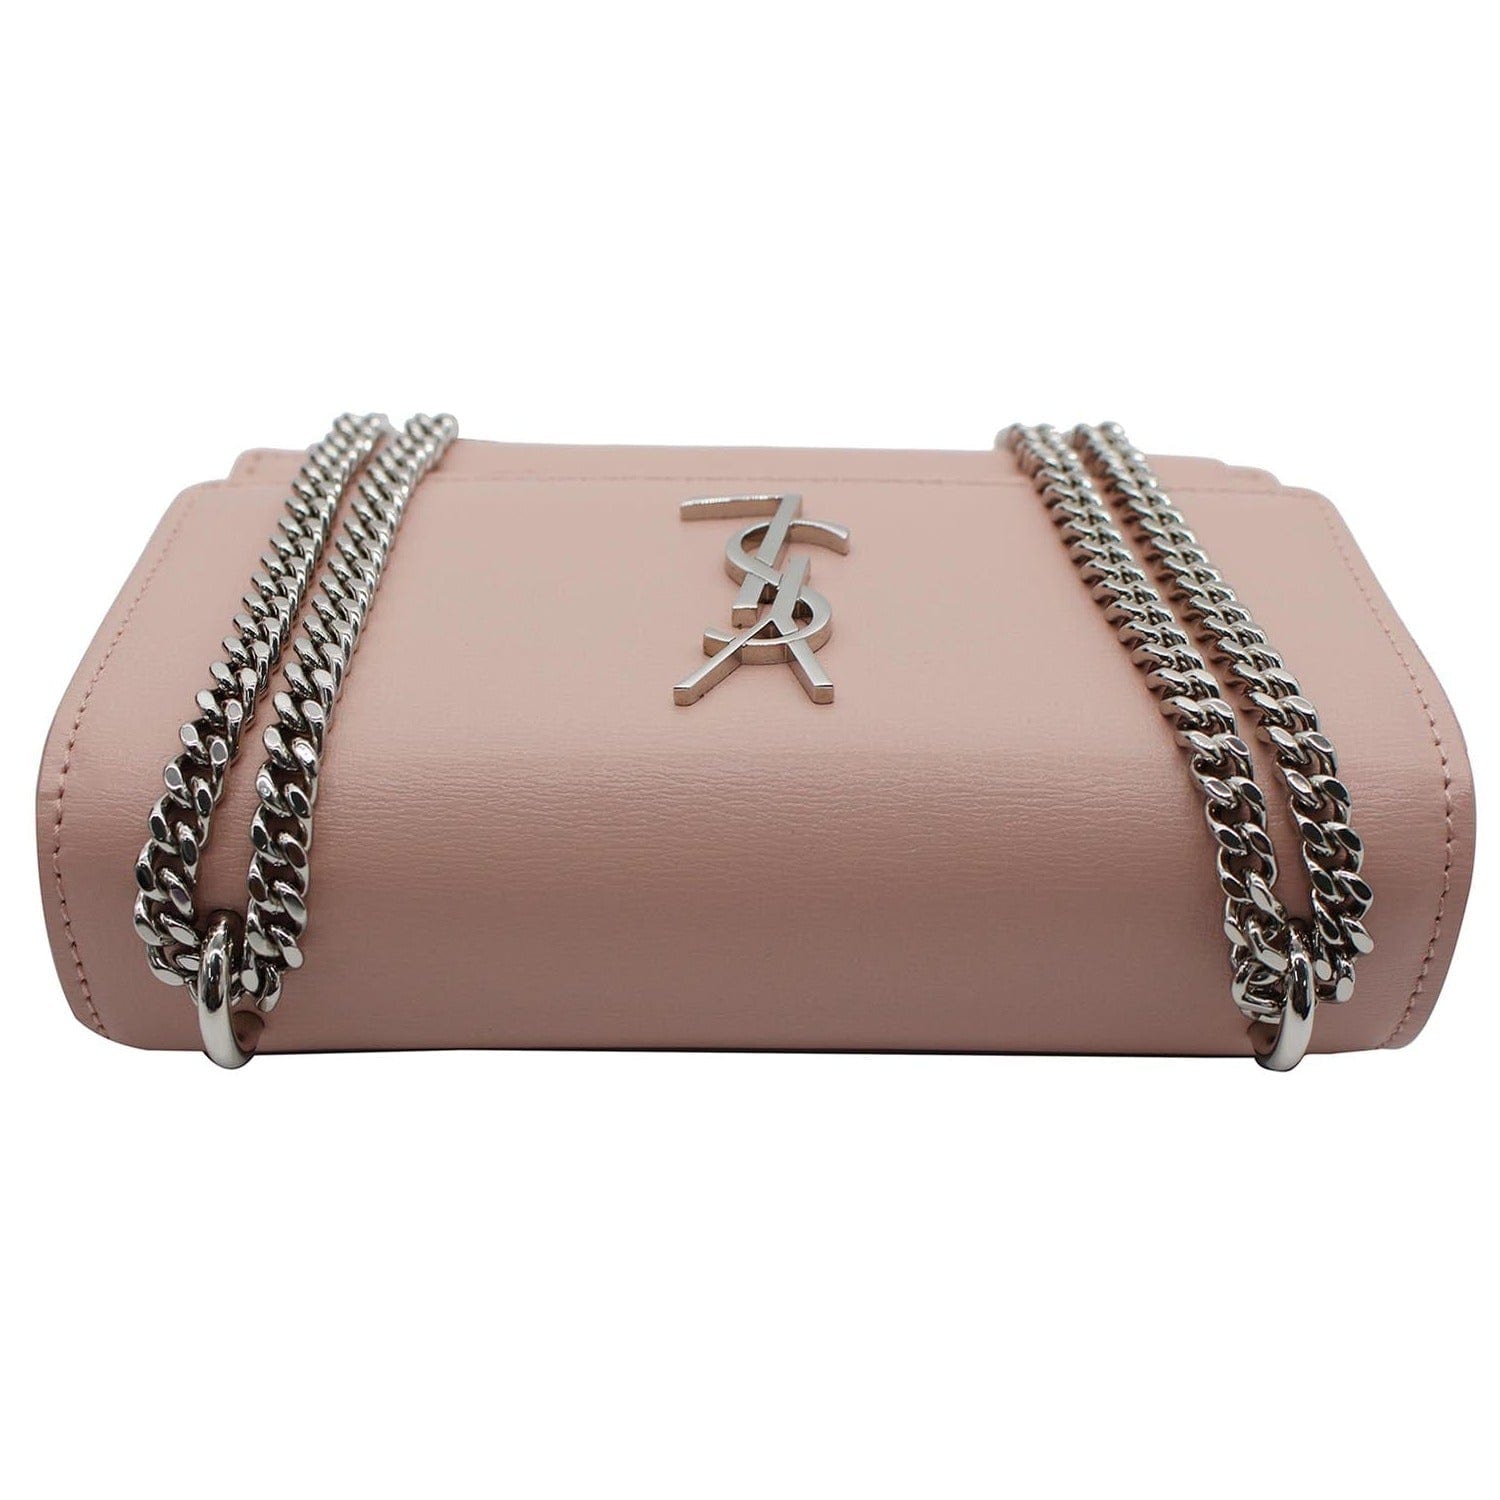 Saint Laurent Monogram YSL Pink Sunset Leather Crossbody bag New